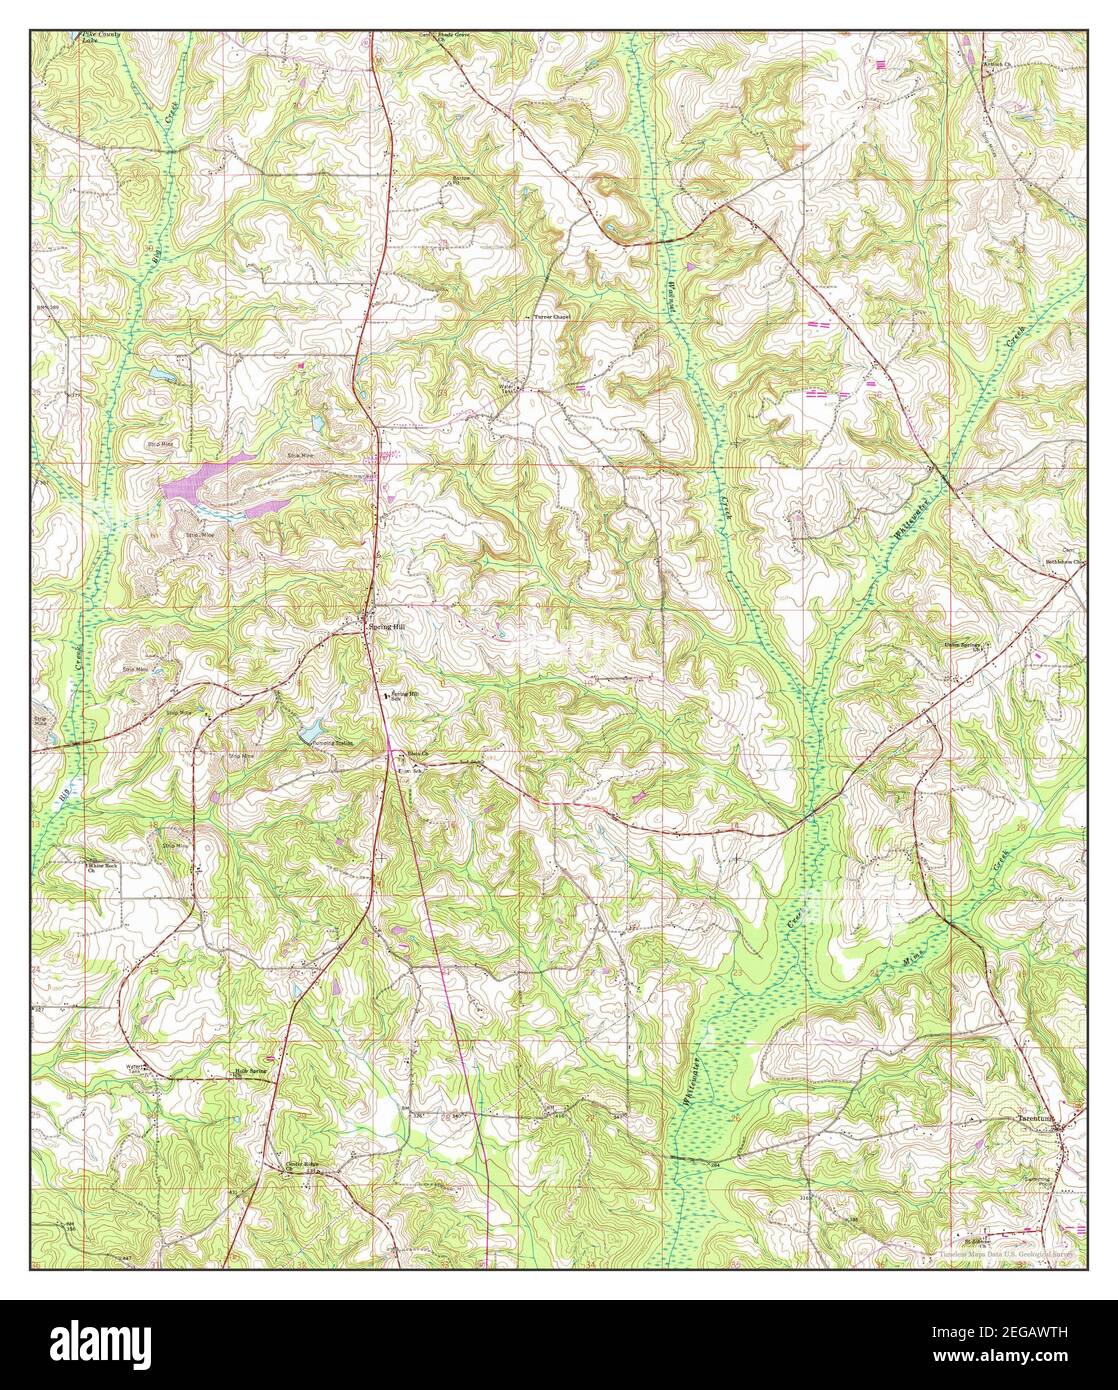 Brundidge NW, Alabama, map 1960, 1:24000, United States of America by Timeless Maps, data U.S. Geological Survey Stock Photo